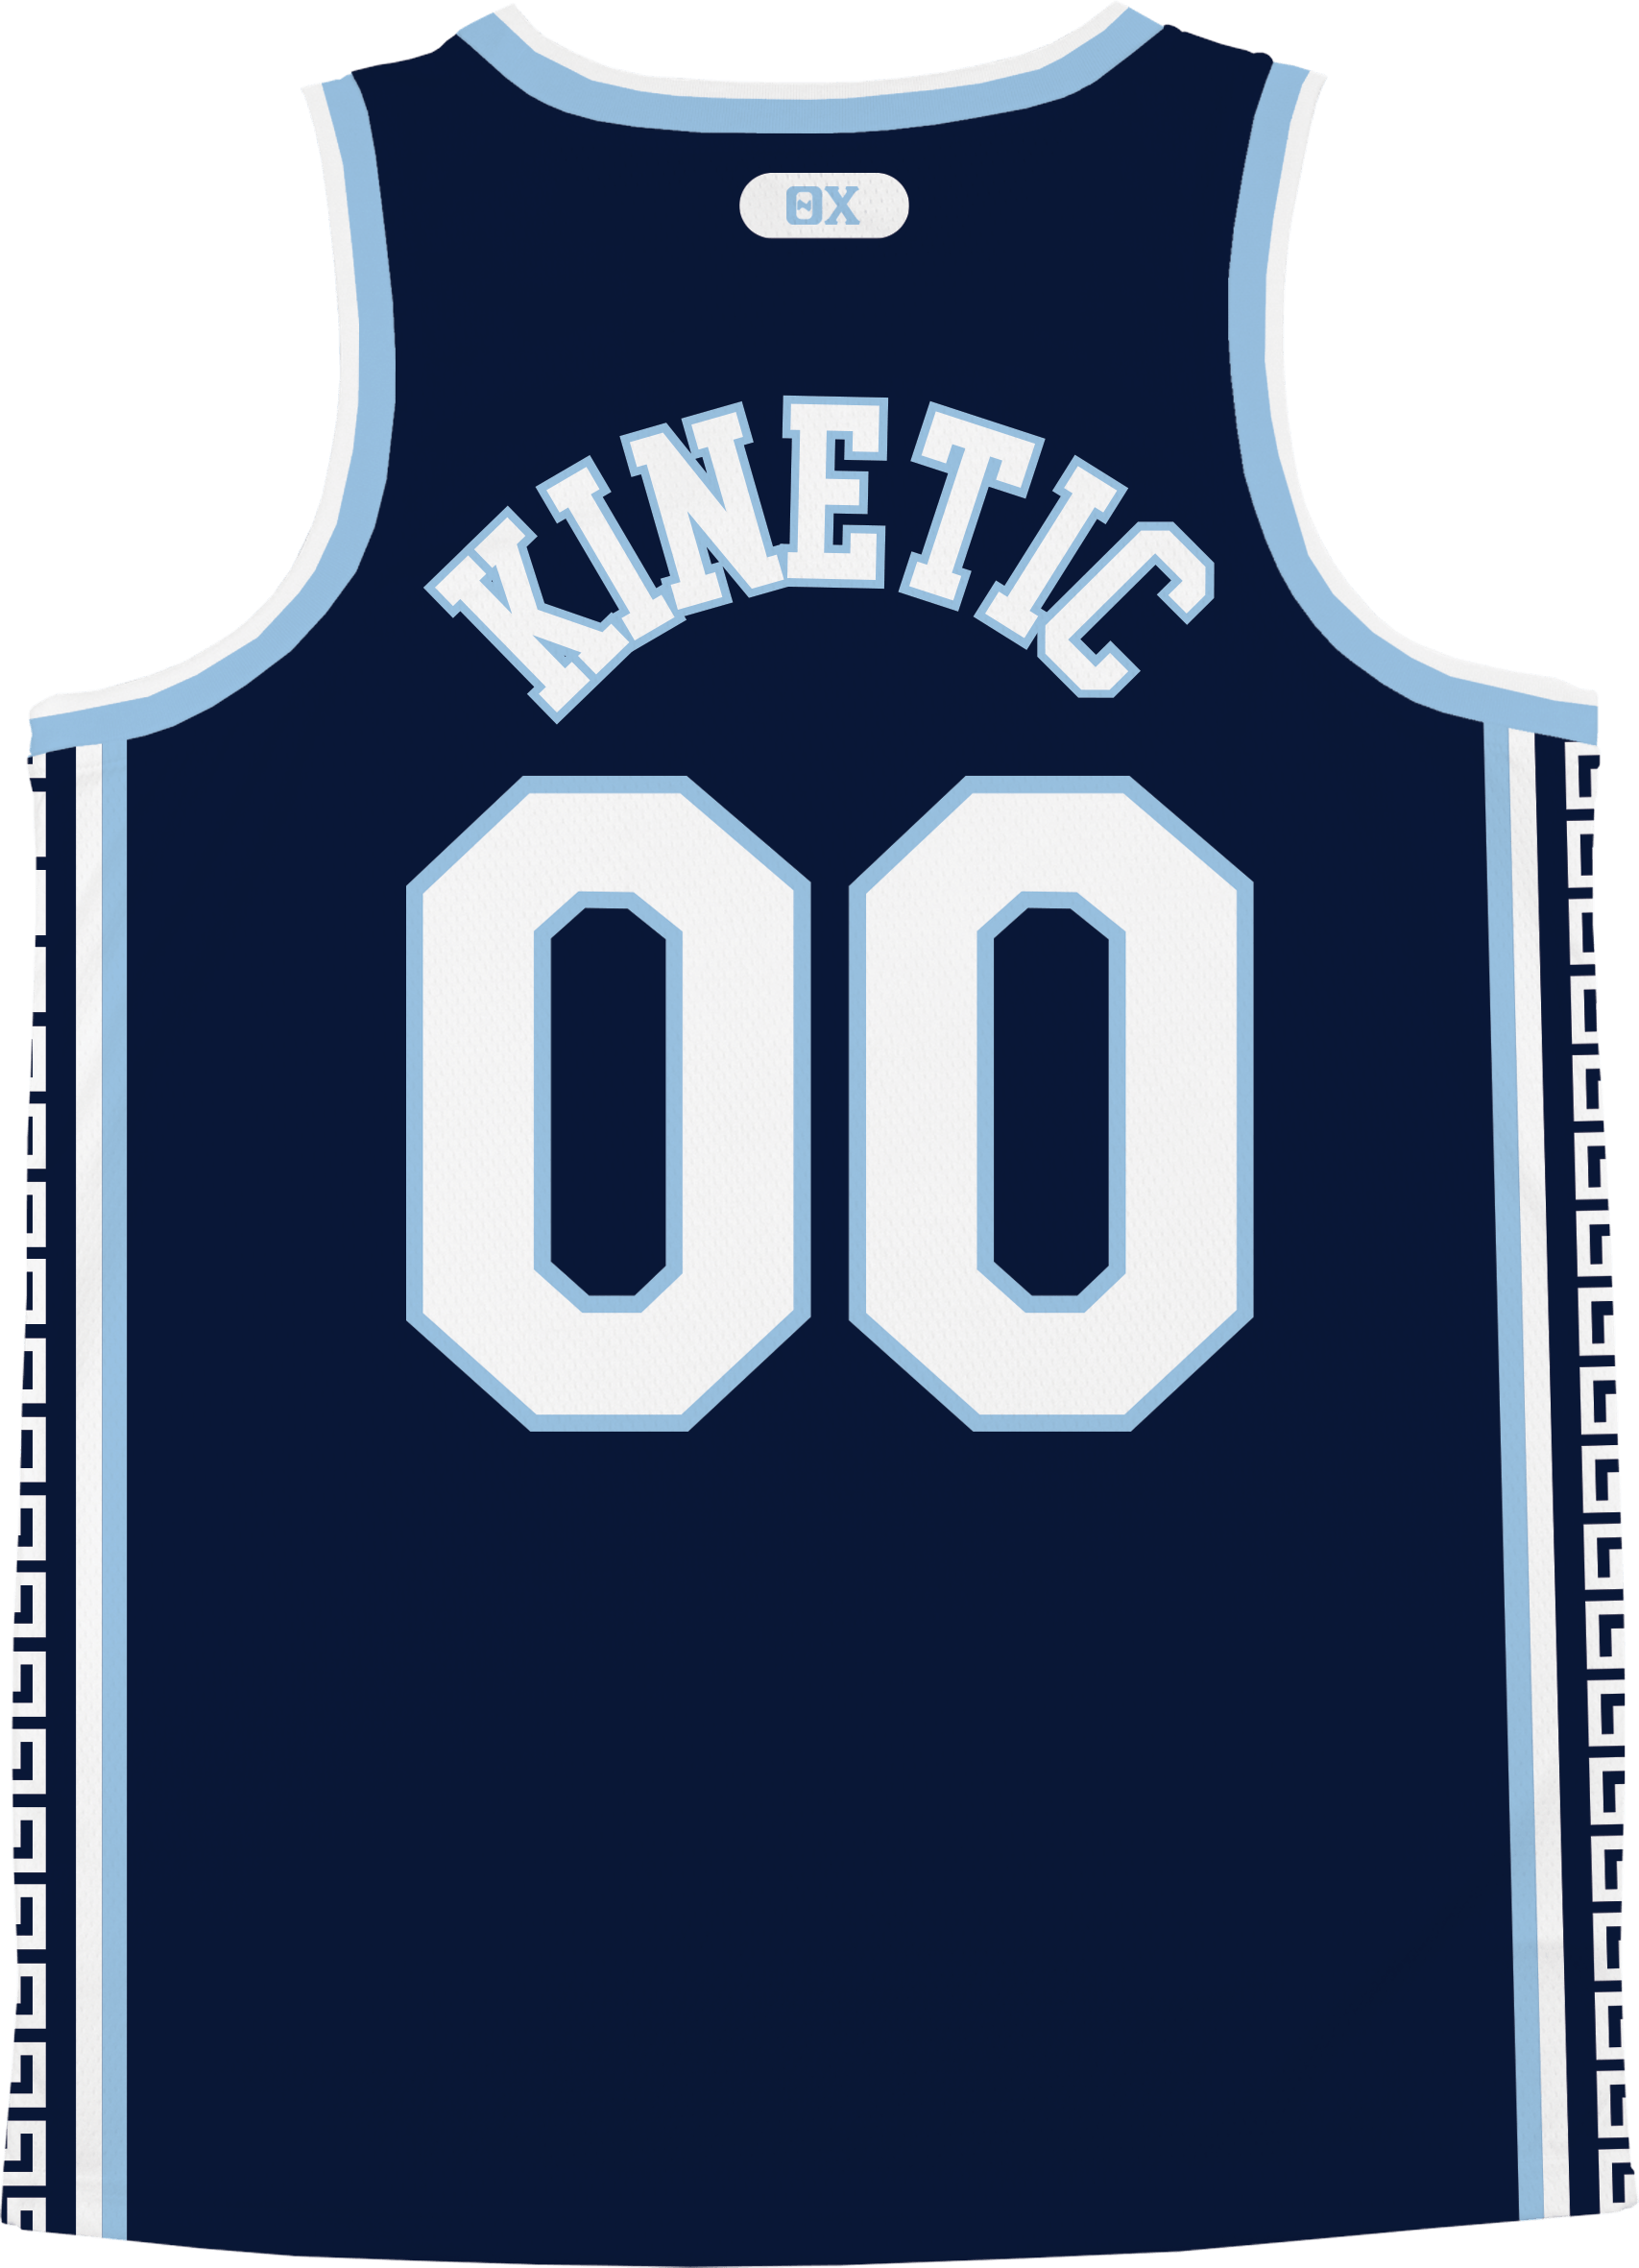 Theta Chi - Templar Basketball Jersey - Kinetic Society